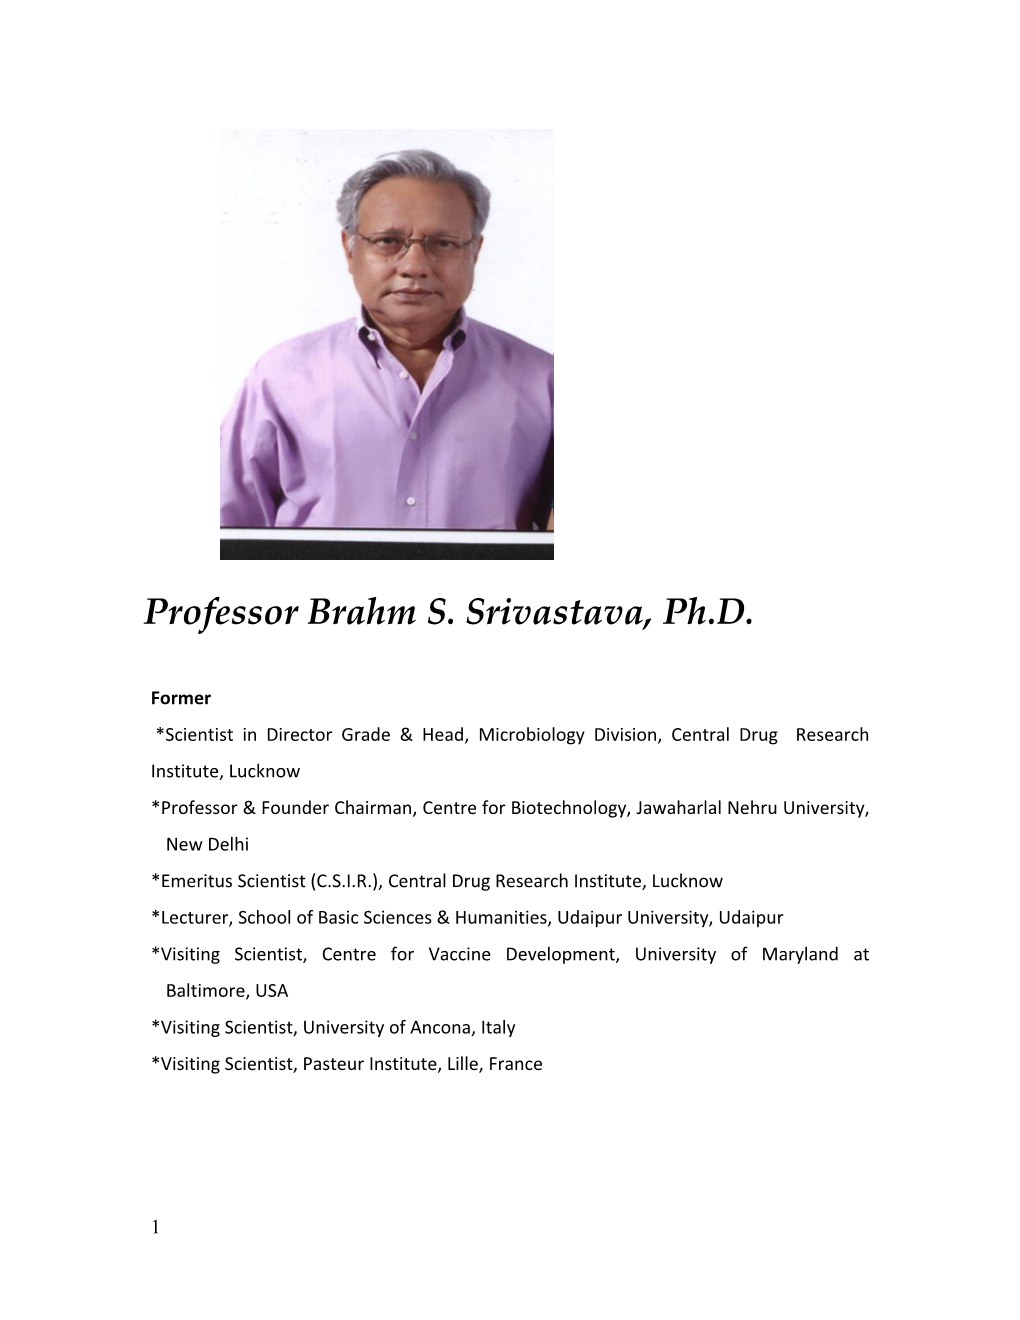 *Professor & Founder Chairman, Centre for Biotechnology, Jawaharlal Nehru University, New Delhi